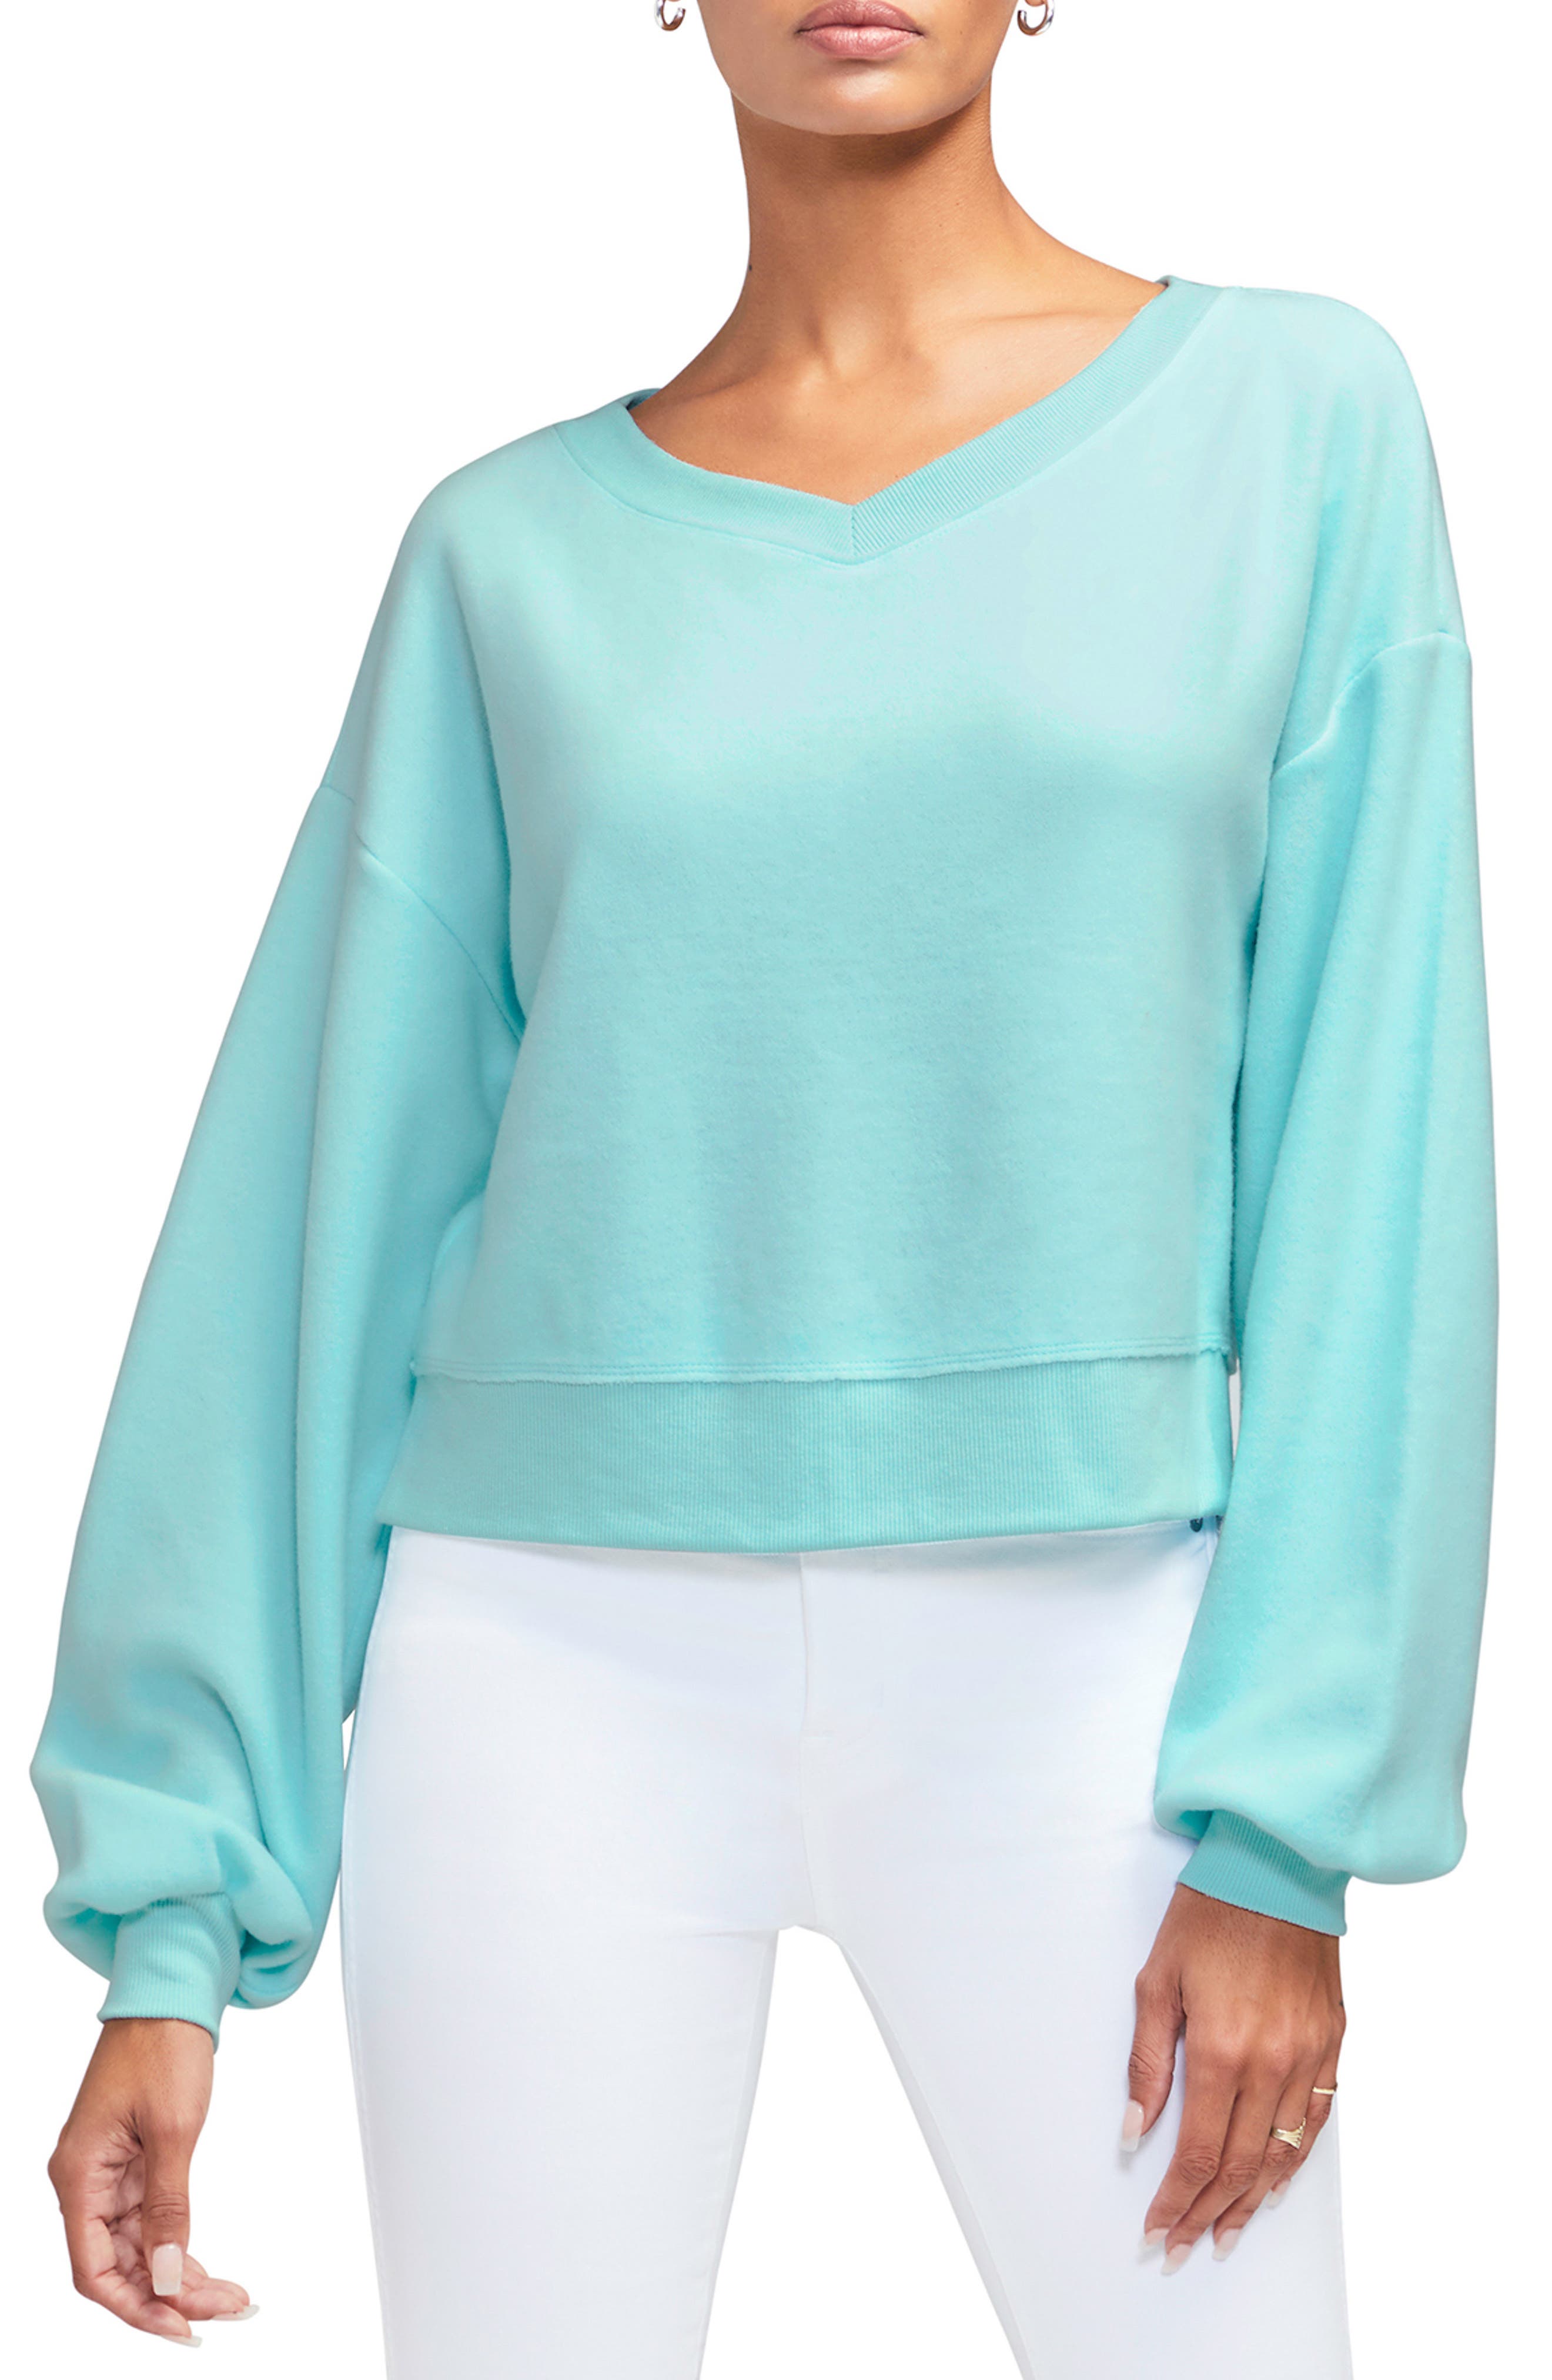 XS L s Wildfox Women's Baggy Sweatshirts Szs: XXS Color: Clean White M